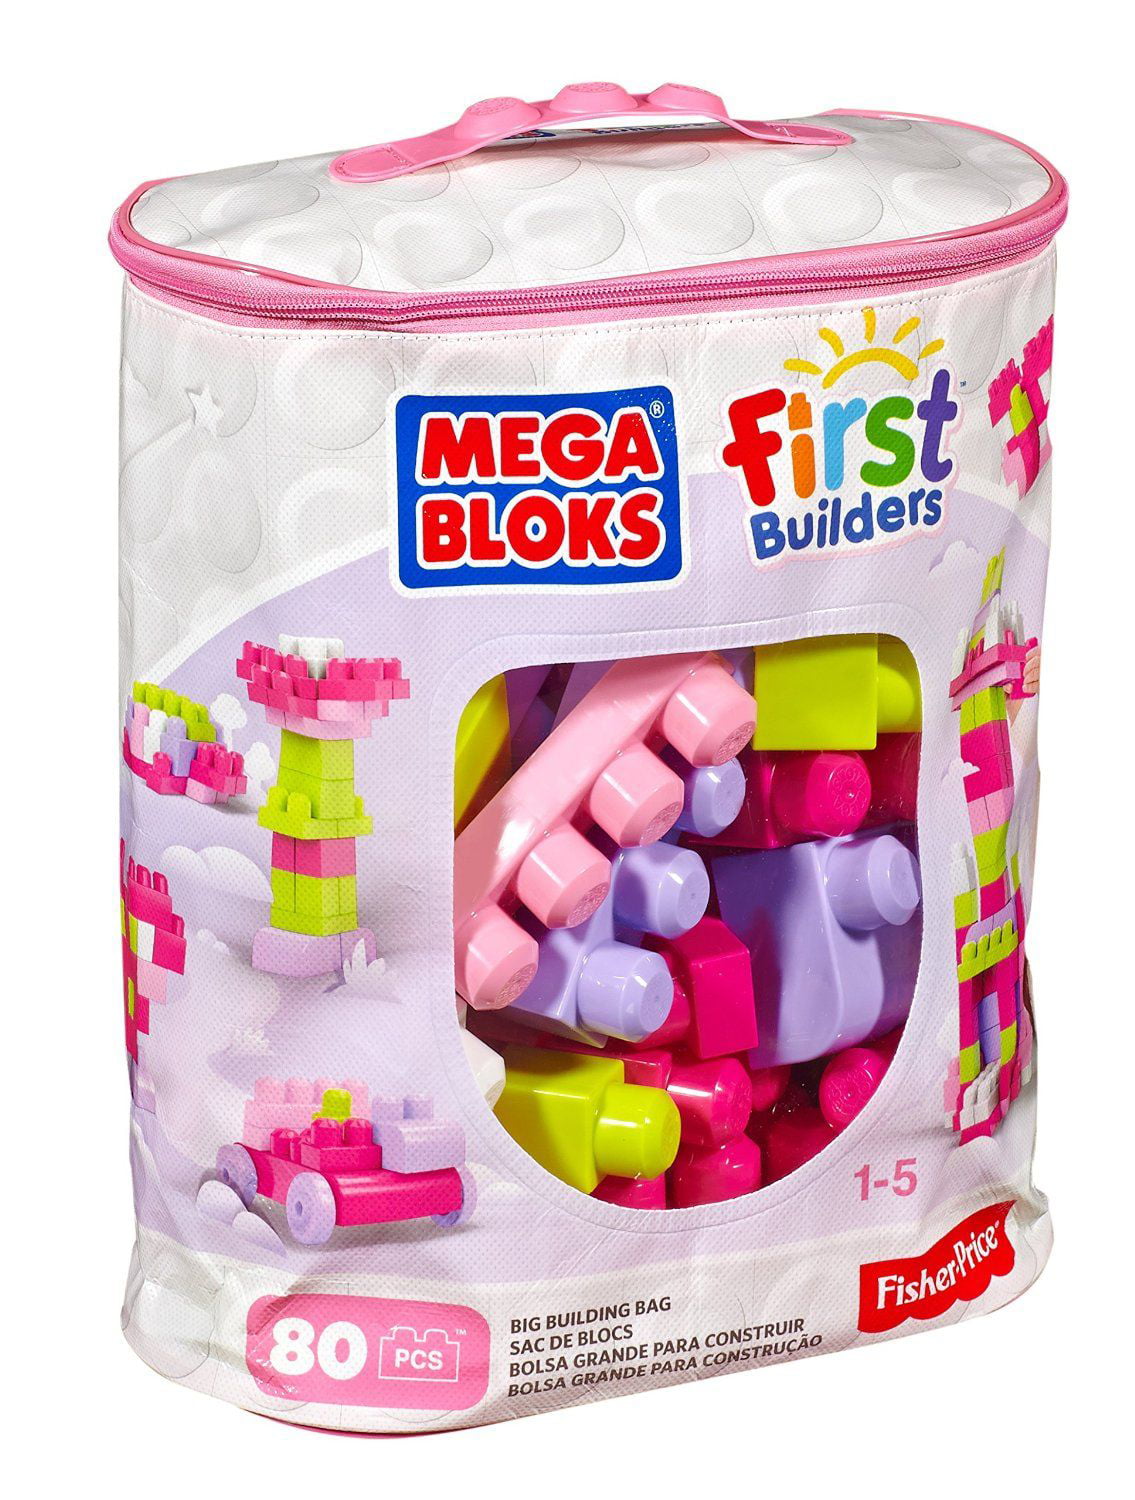 Mega Bloks First Builders Big Building Bag 80 Pieces DCH62 Pink for sale online